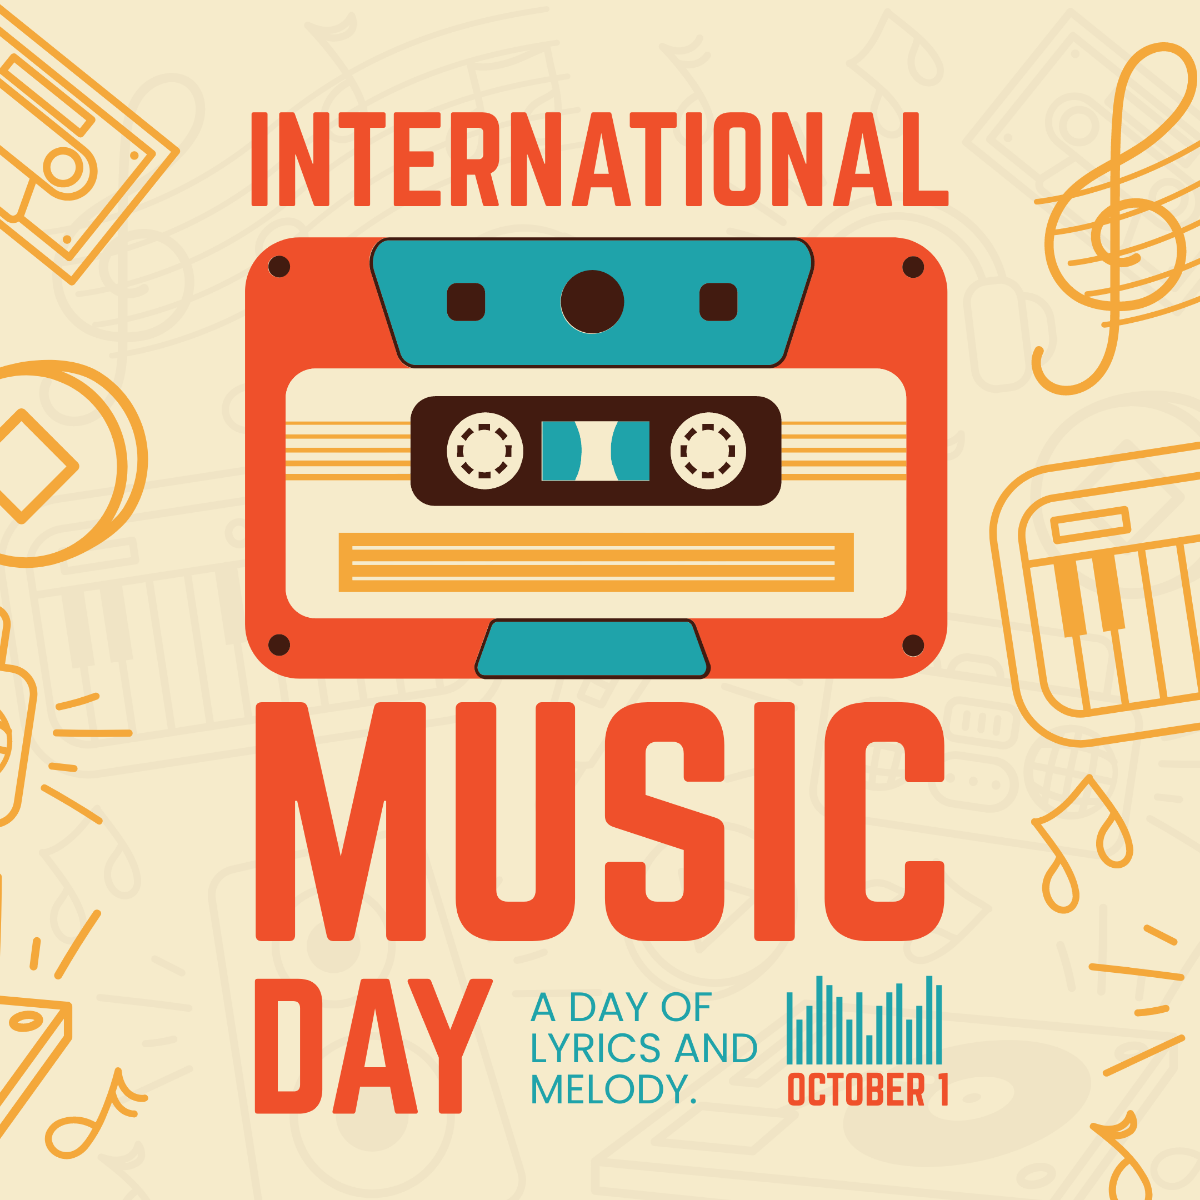 International Music Day Instagram Post Template